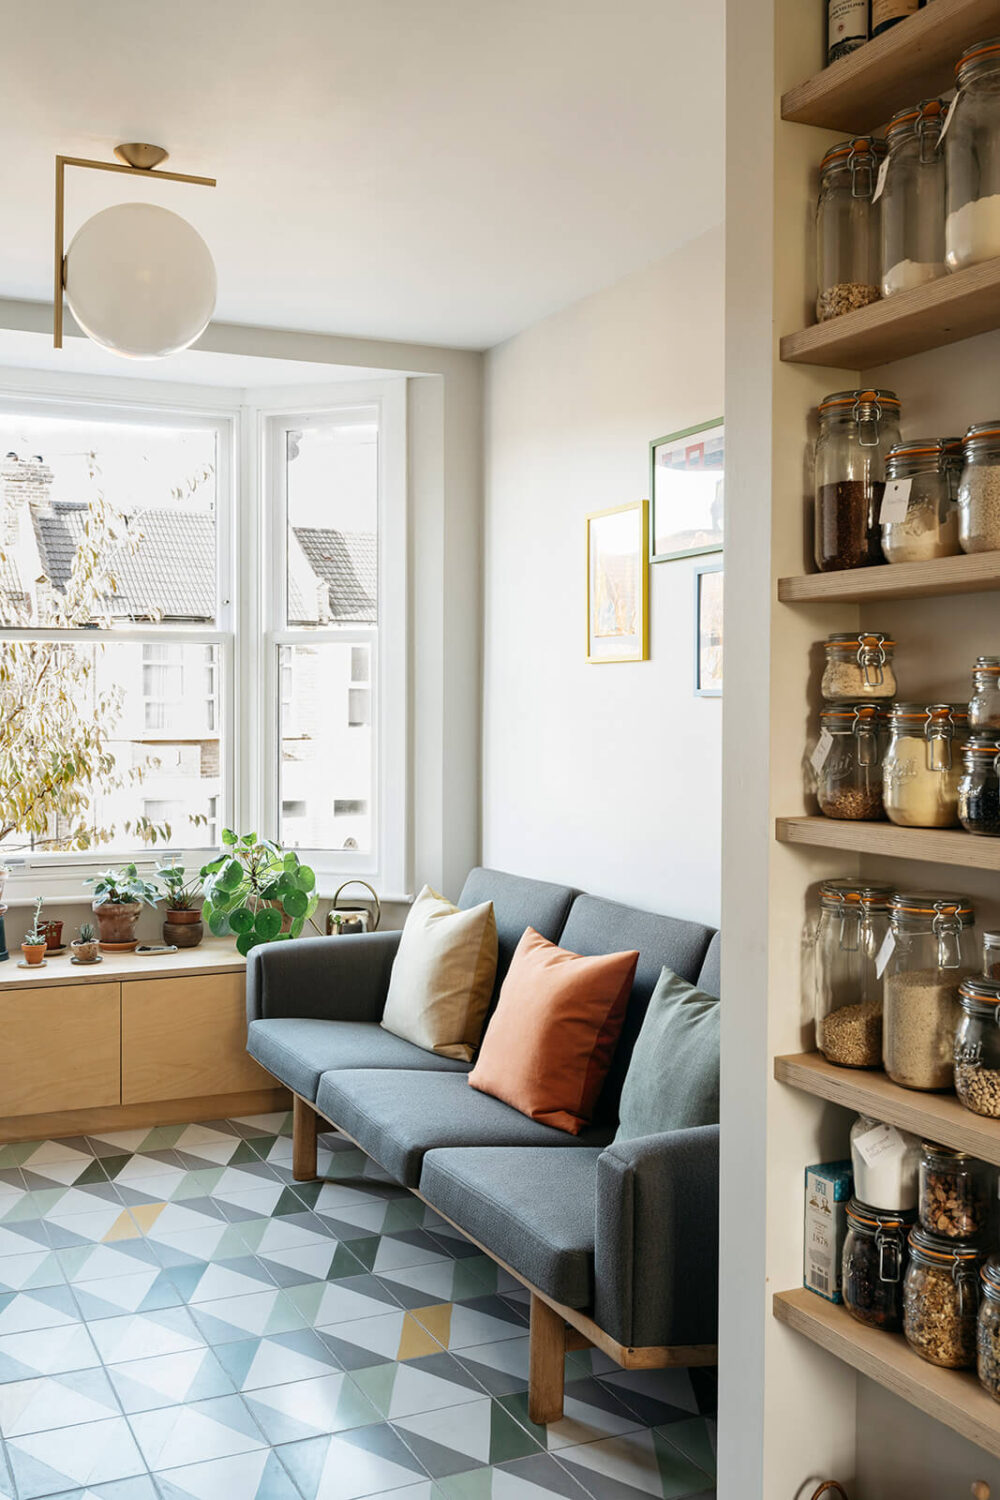 small-living-room-floor-tiles-shelves-nordroom